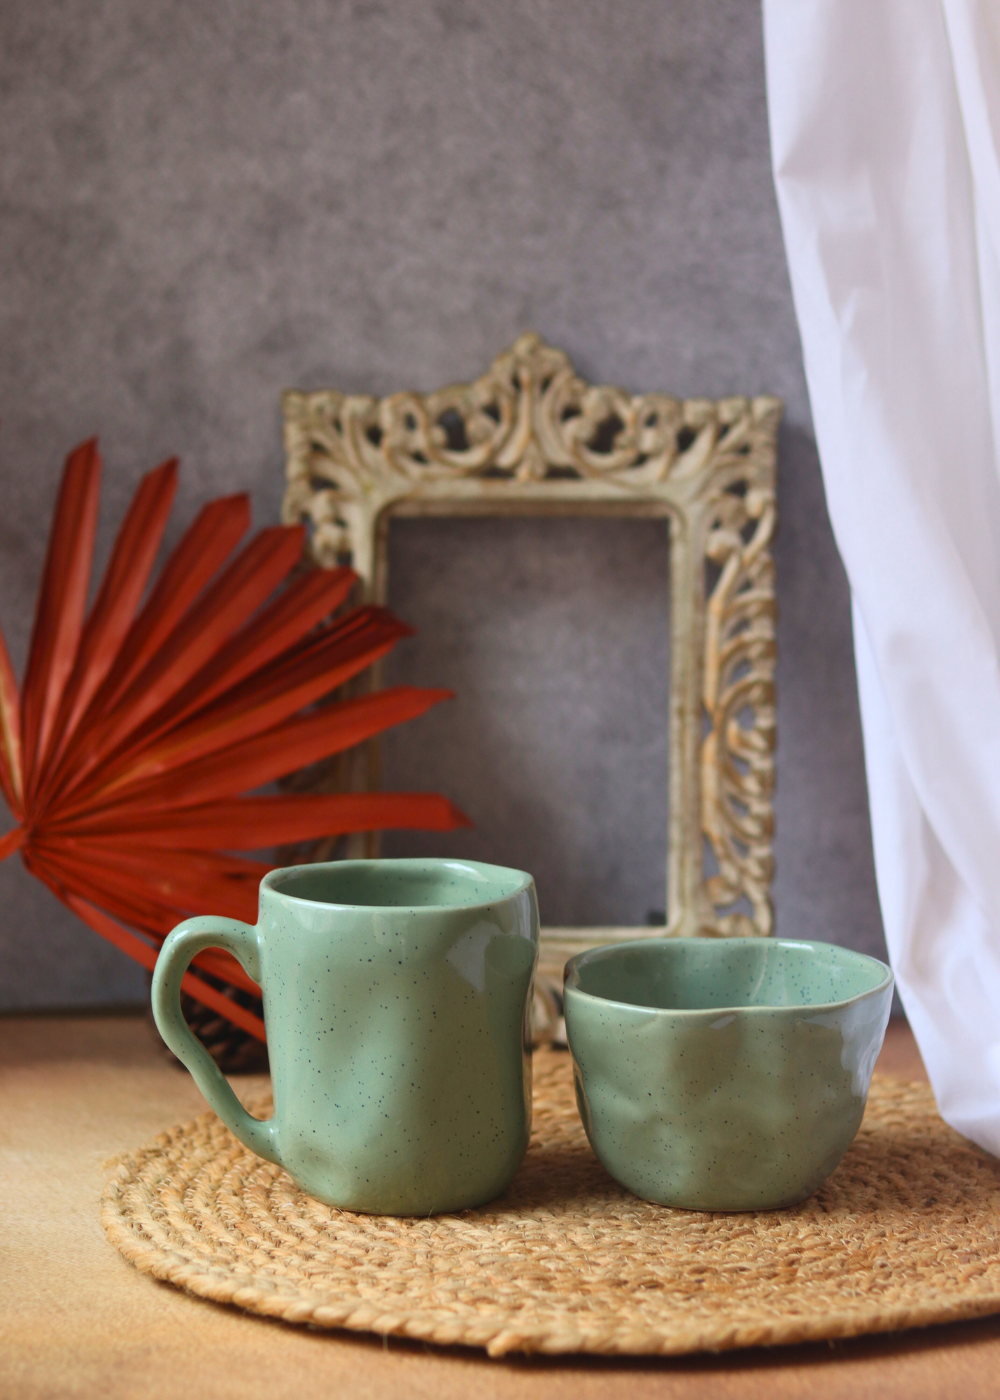 Kitchenware coffee mug & bowl sage green color